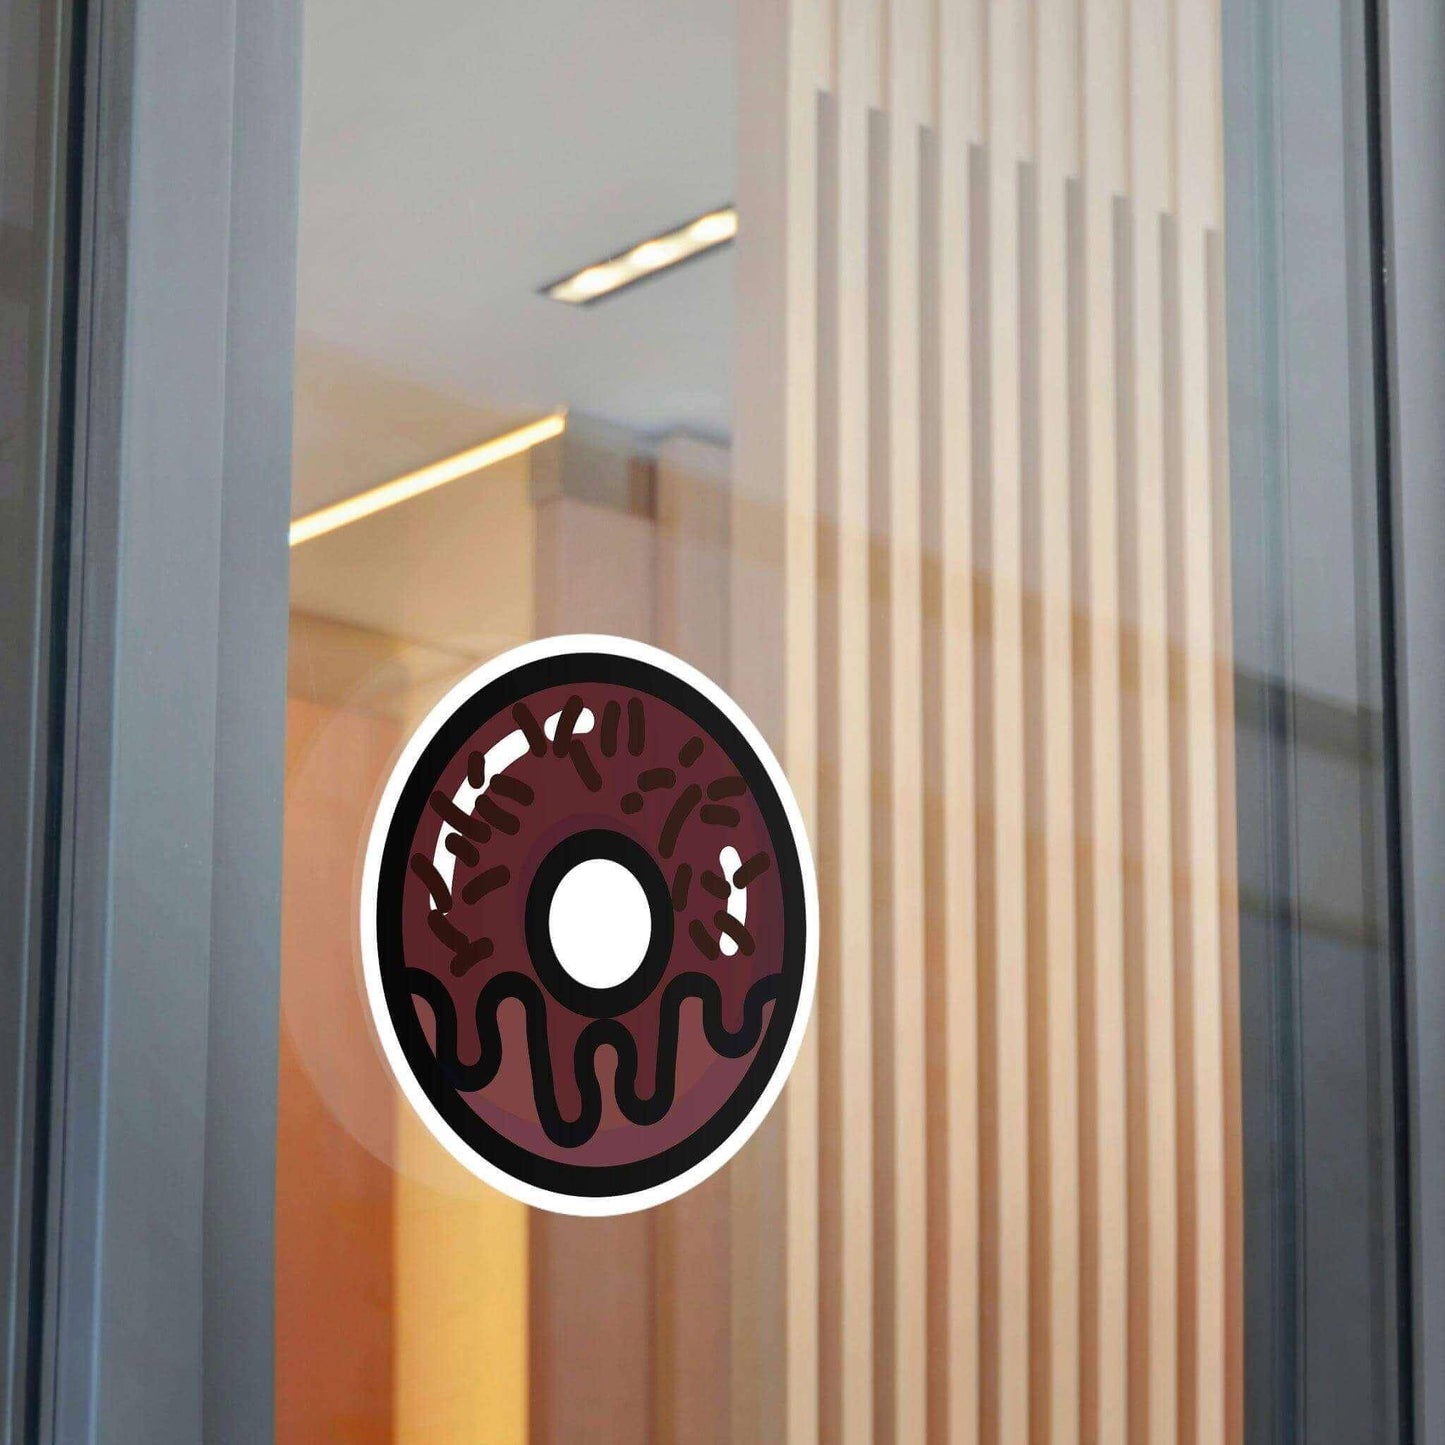 Chocolate Donut Sticker - Premium Paper - Shaneinvasion - On glass wall